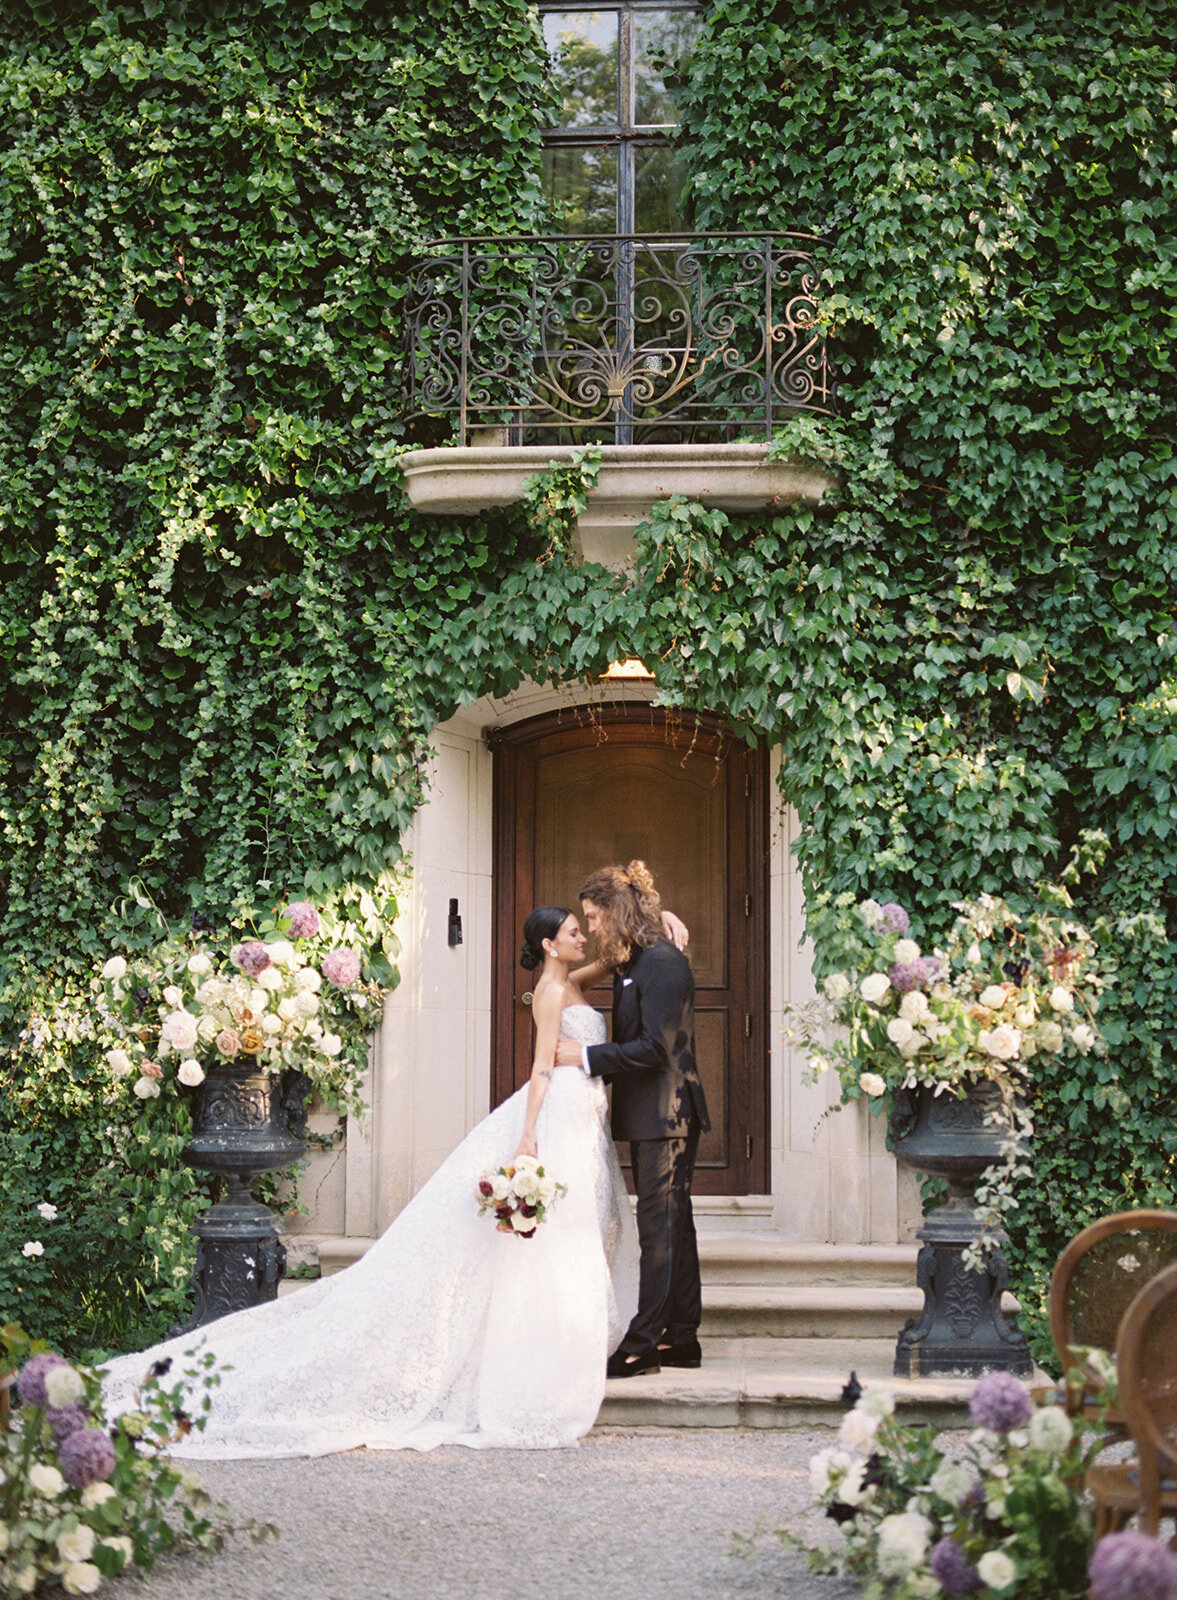 Greencrest Manor - Battle Creek Michigan Wedding Venues - Stephanie Michelle Photography - _stephaniemichellephotog2-R1-E008